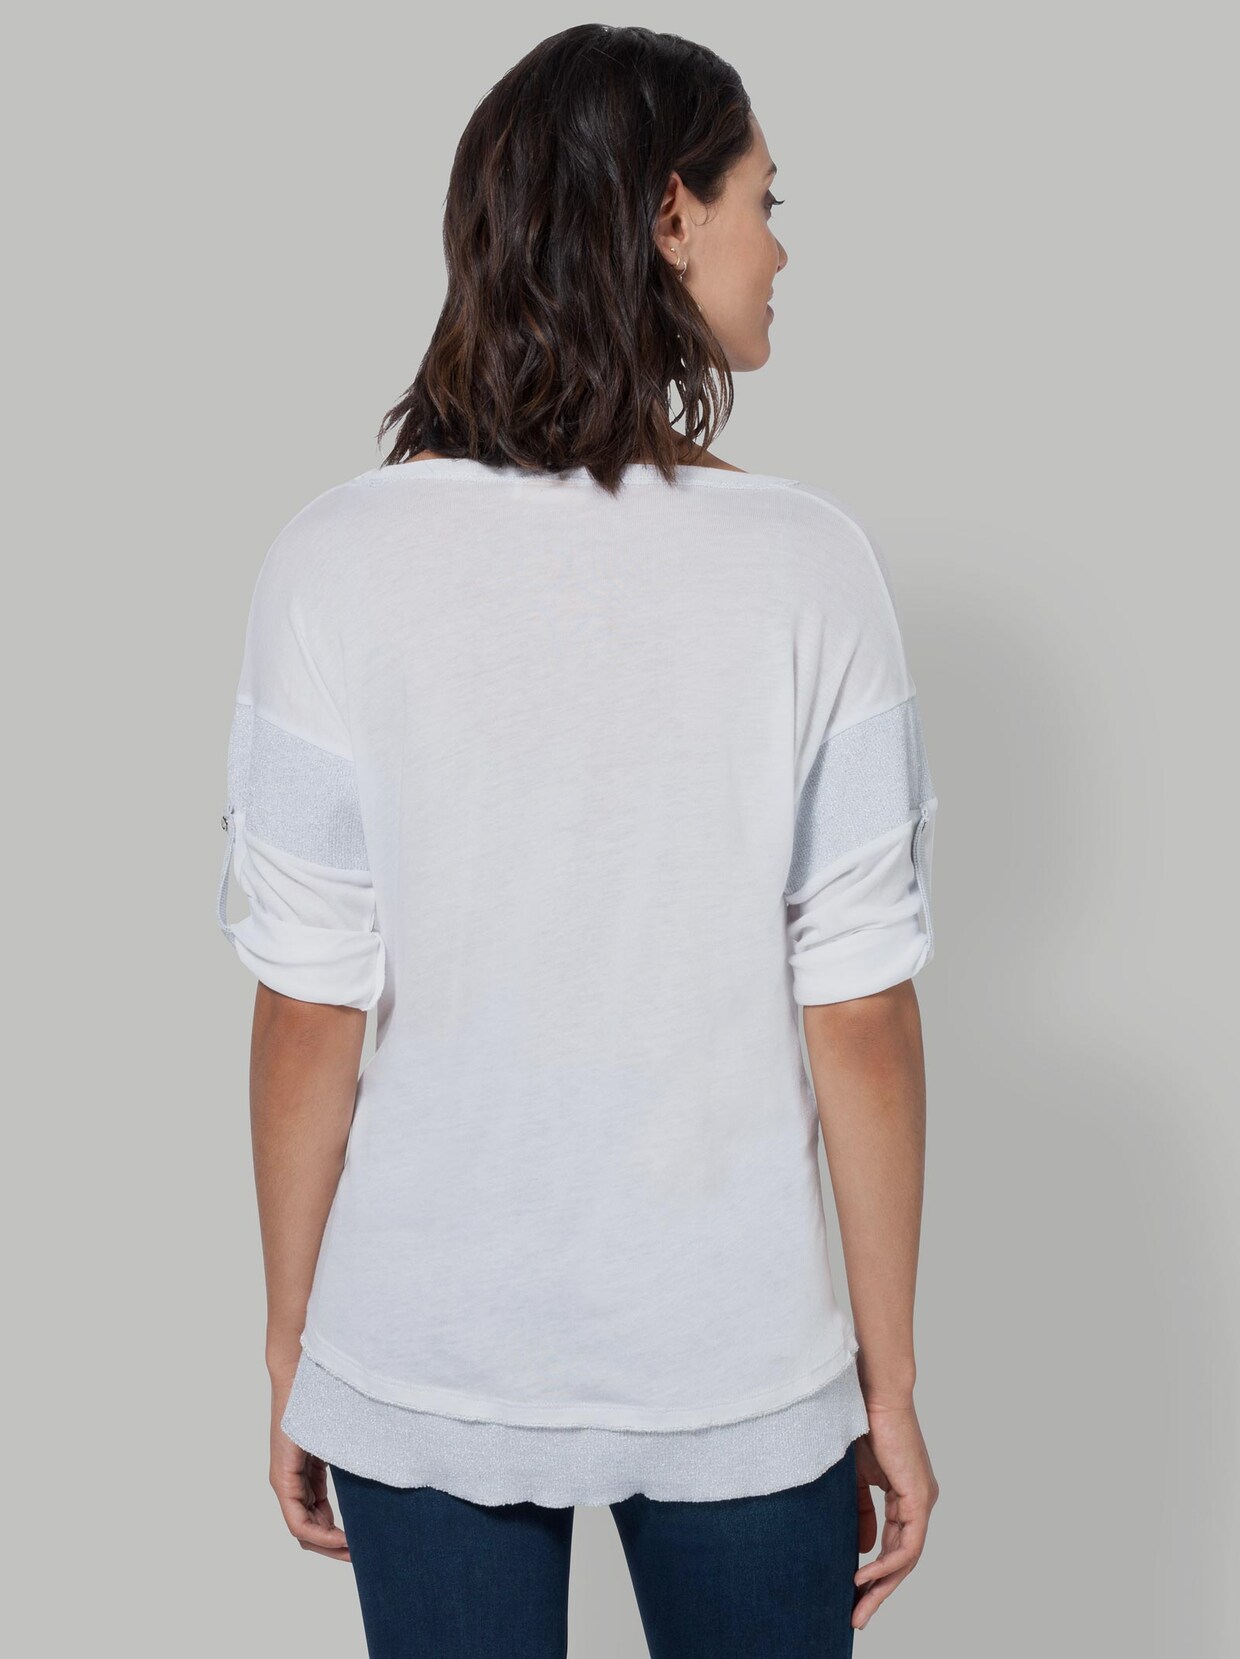 Print-Shirt - weiß